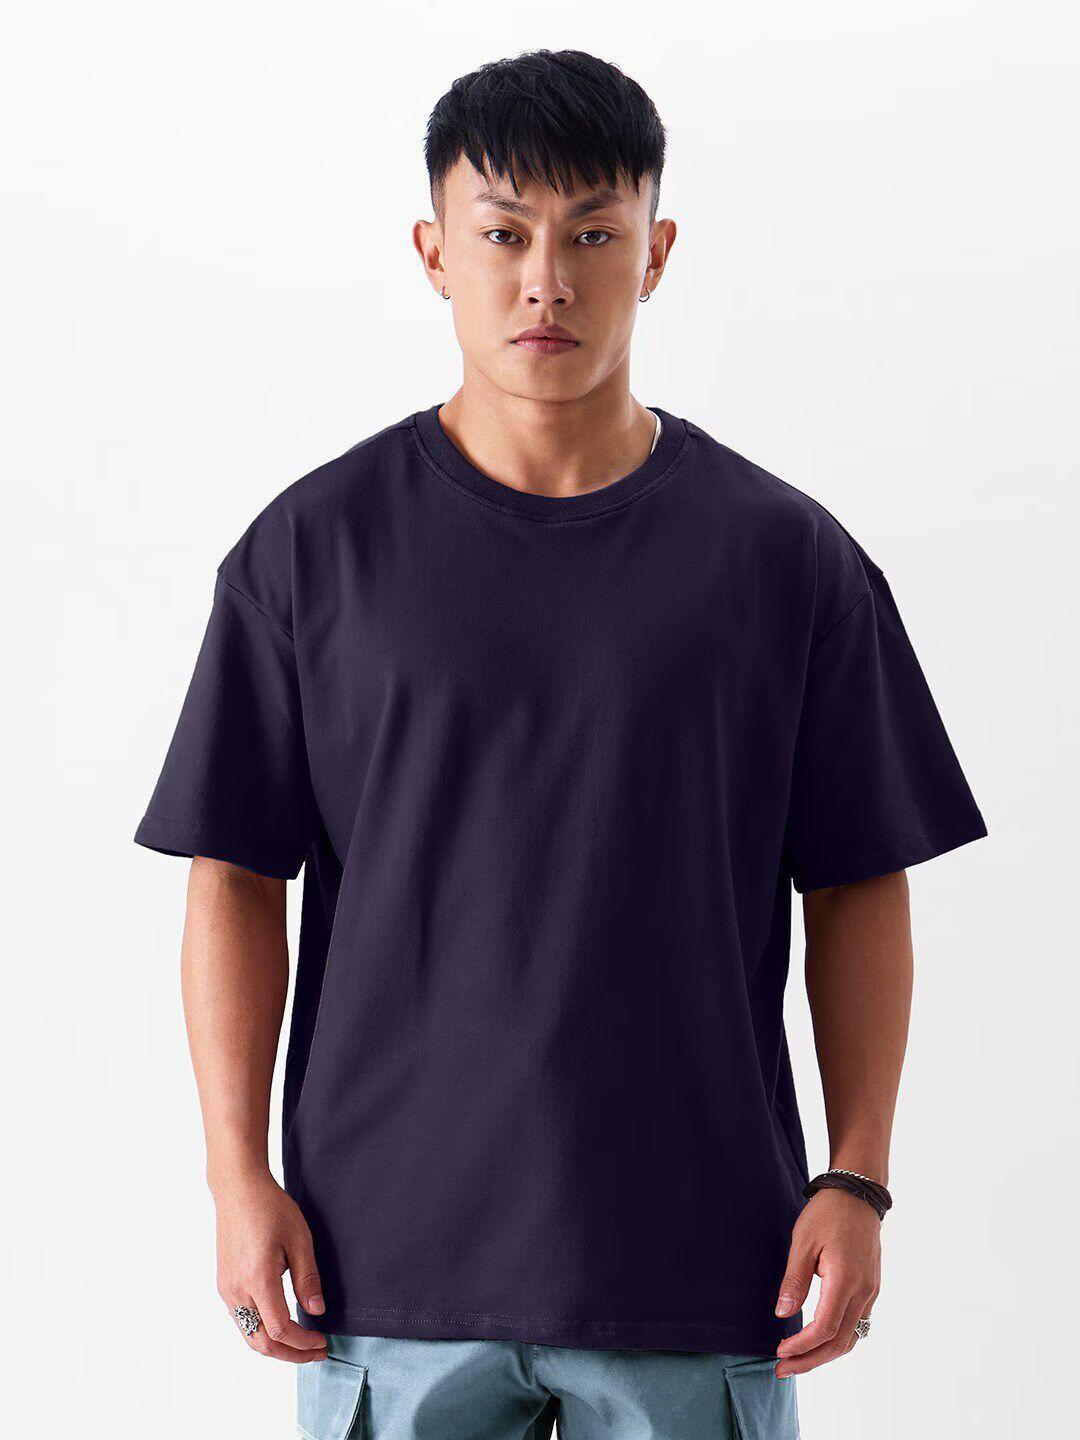 crazymonk cotton three-quarter sleeves oversized raw edge t-shirt